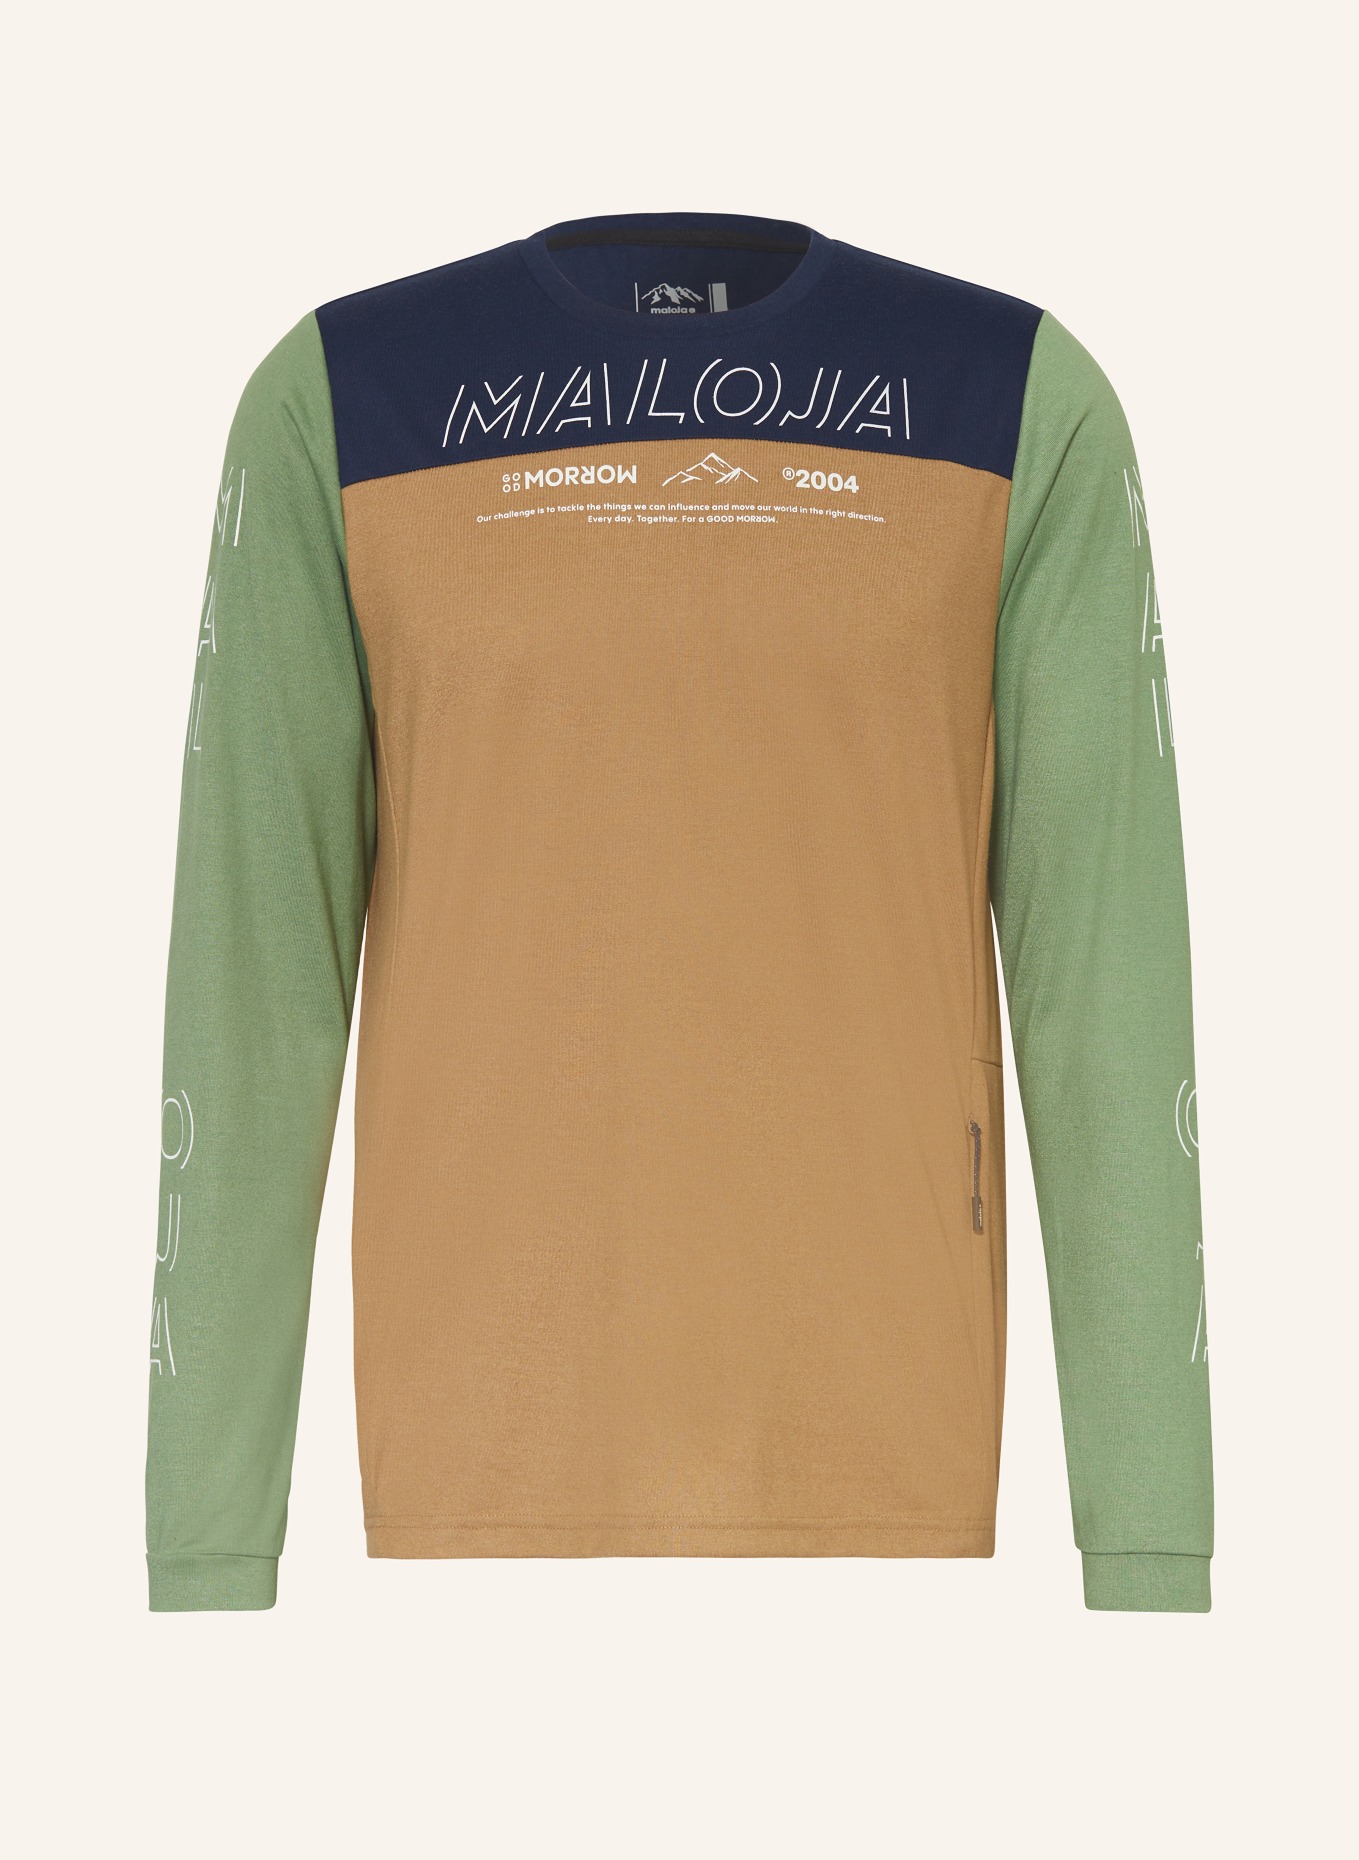 maloja Cycling shirt HAUNOLDM., Color: CAMEL/ DARK BLUE/ GREEN (Image 1)